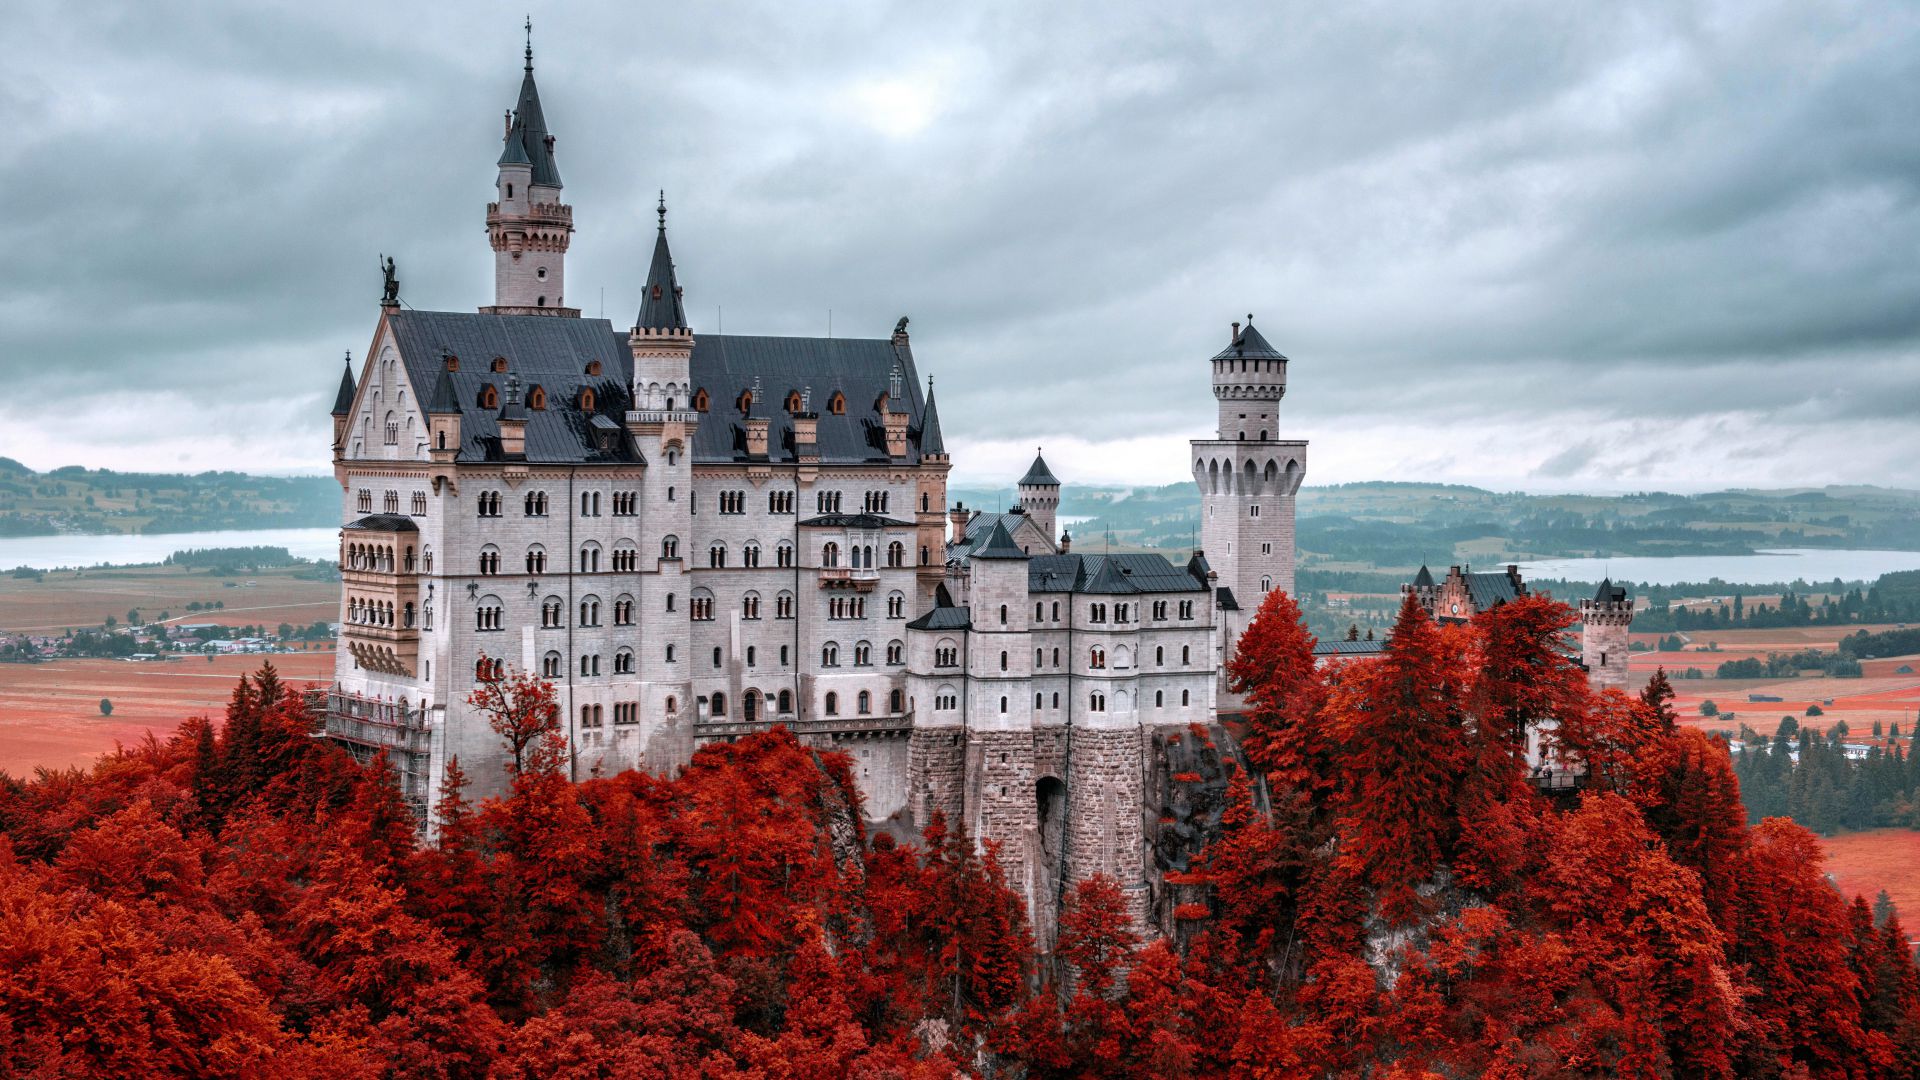 Замок Нойшванштайн, Бавария, Германия, Туризм, Путешествие, Neuschwanstein castle, Bavaria, Germany, Tourism, Travel (horizontal)